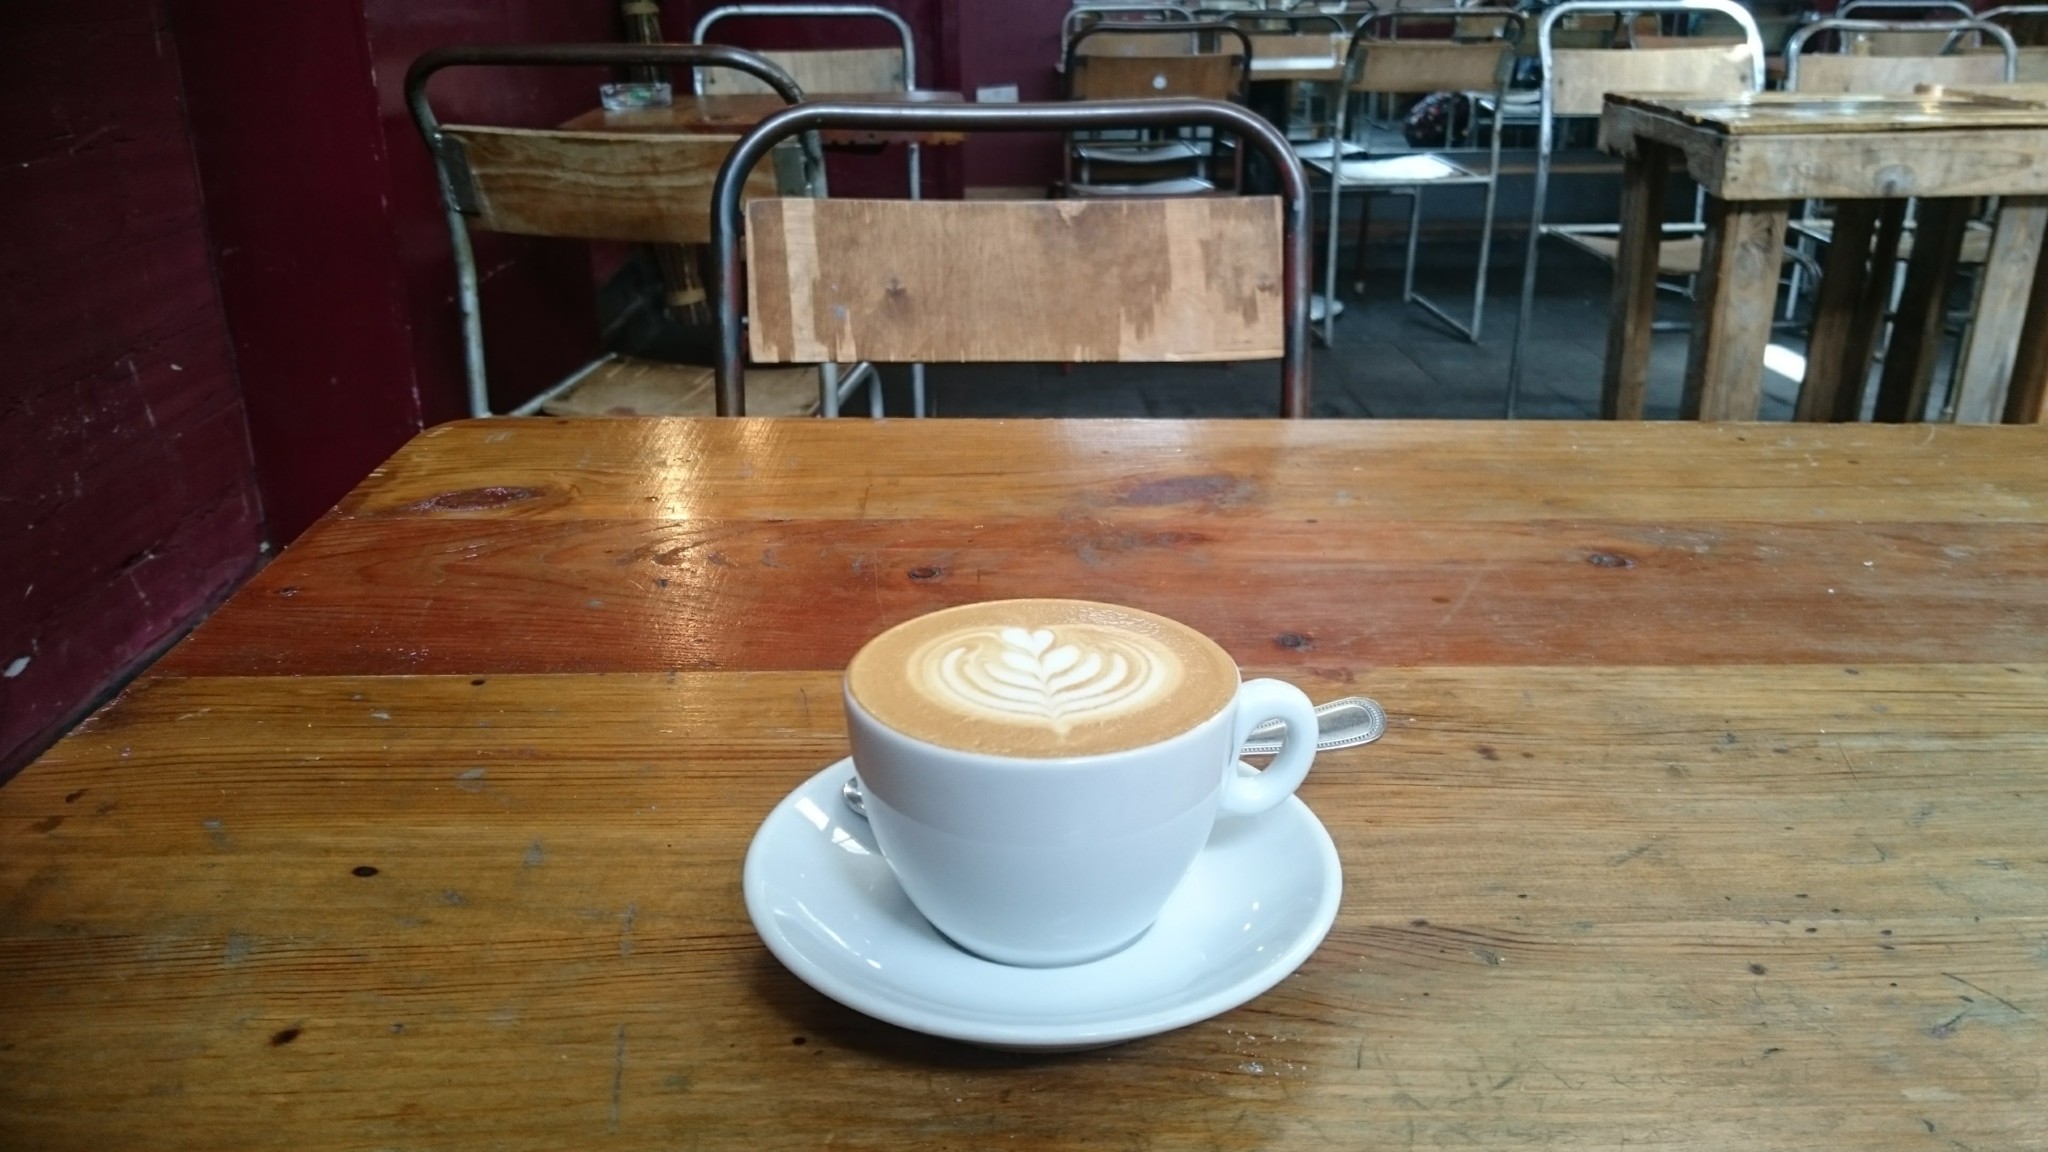 Vice Coffee Dublin